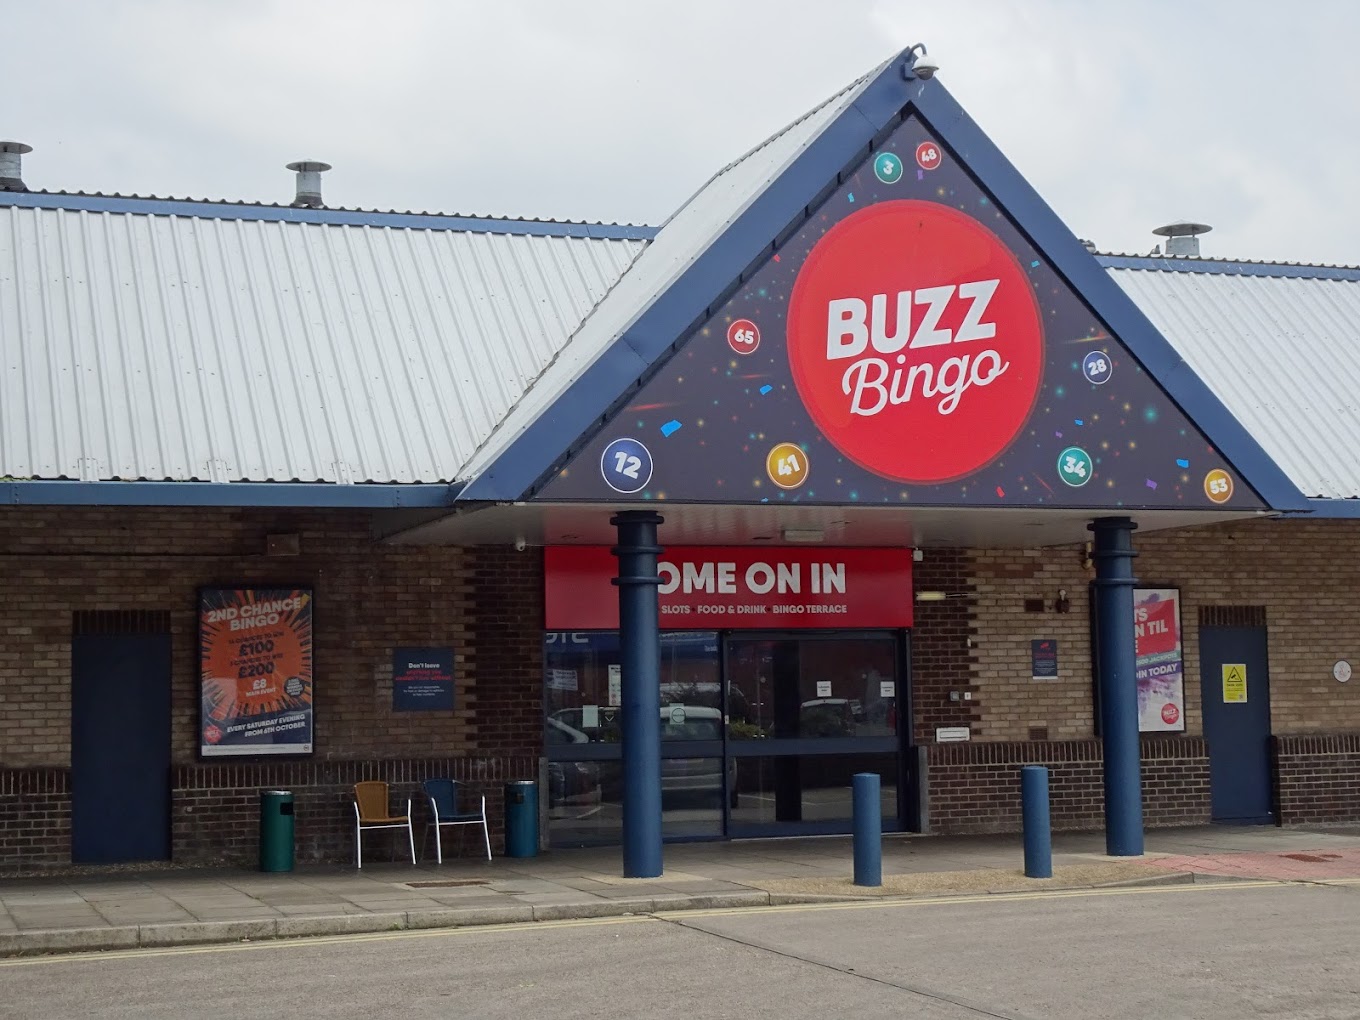 Images Buzz Bingo and The Slots Room Ipswich